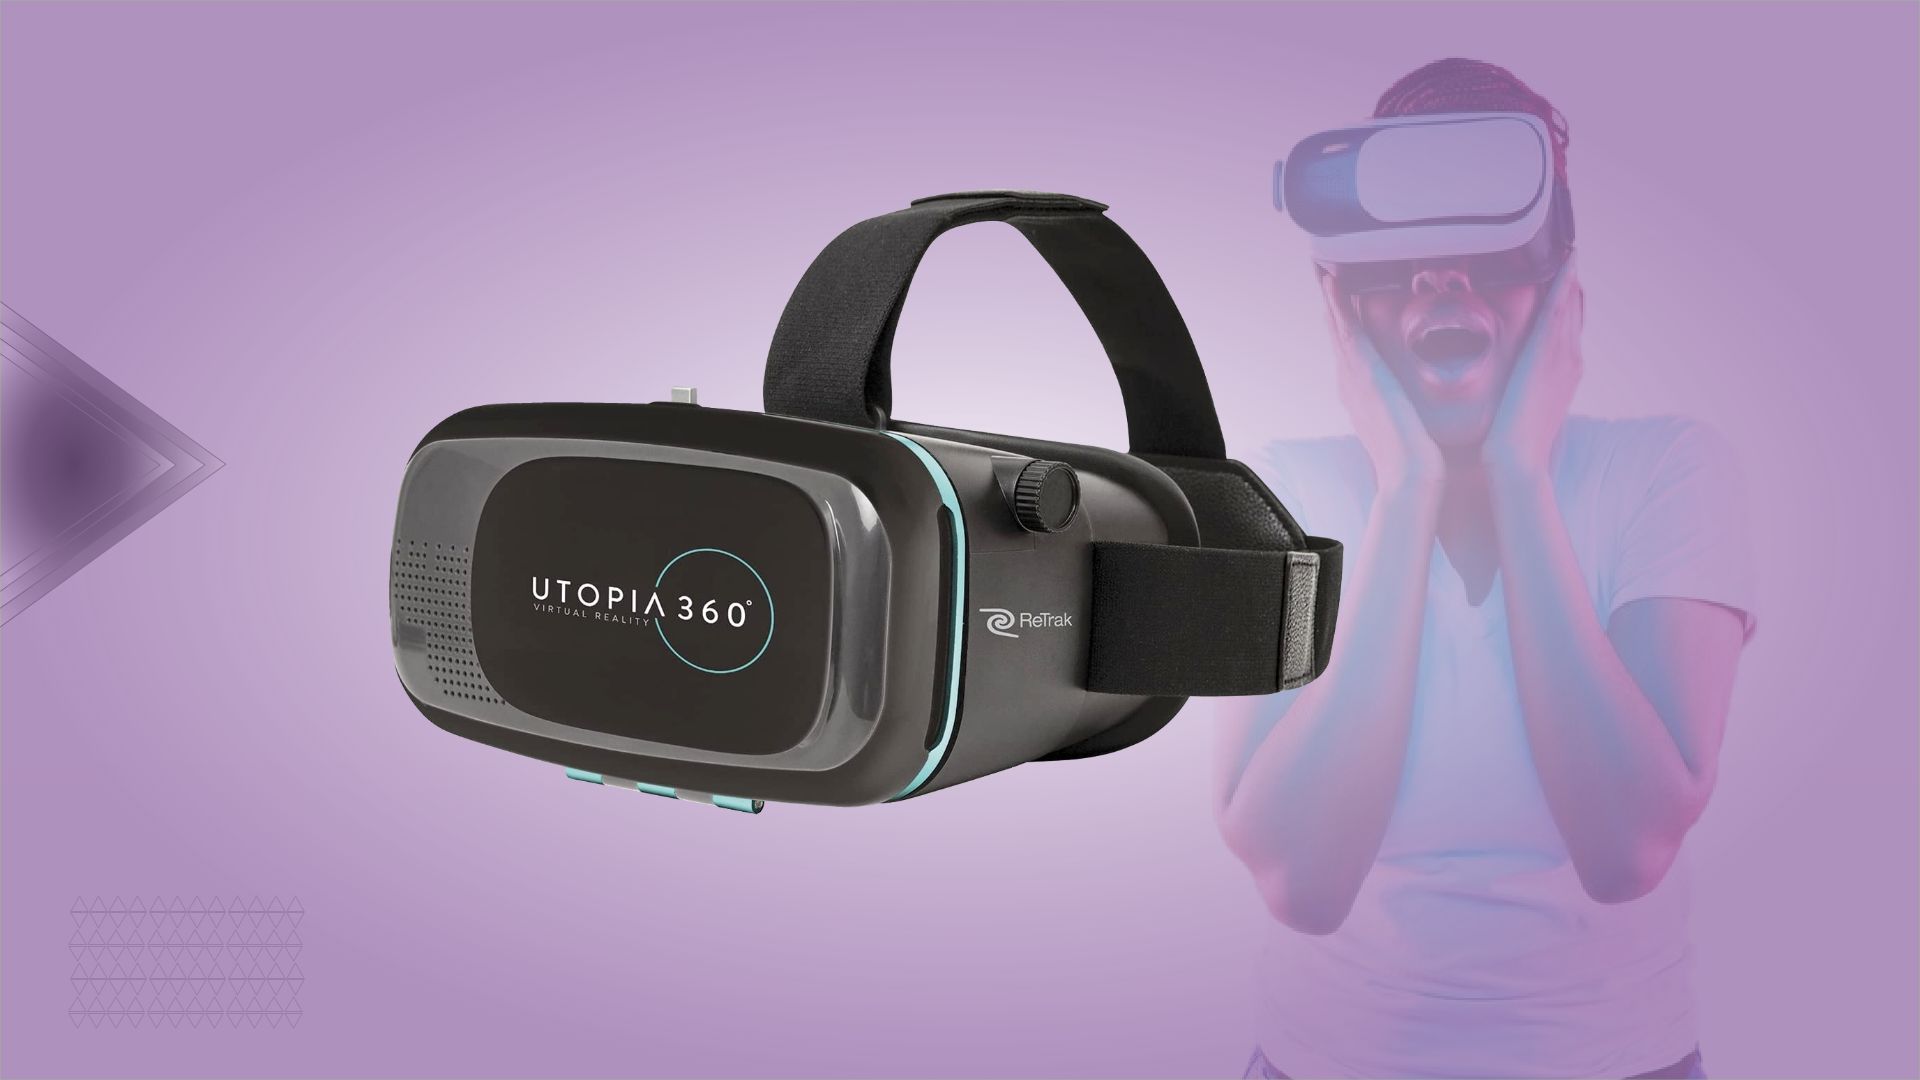 Utopia 360° VR Headset